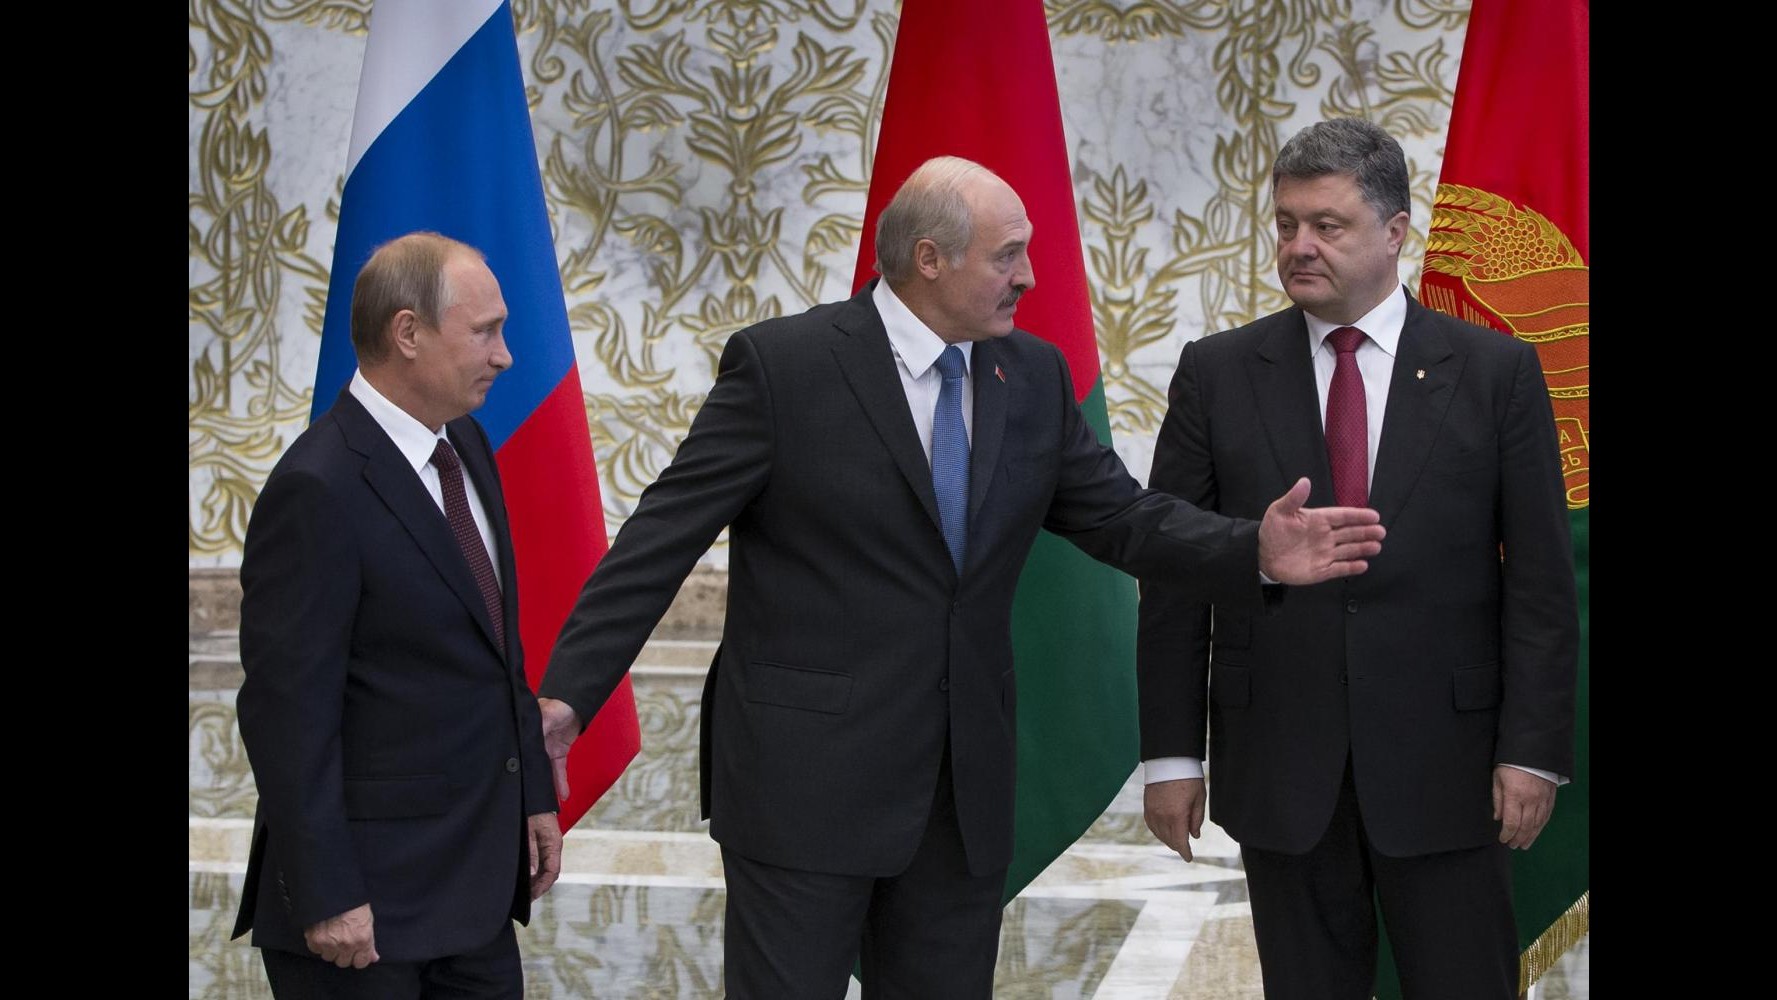 Ucraina, Poroshenko: Vedrò Putin a Milano, colloqui non saranno facili